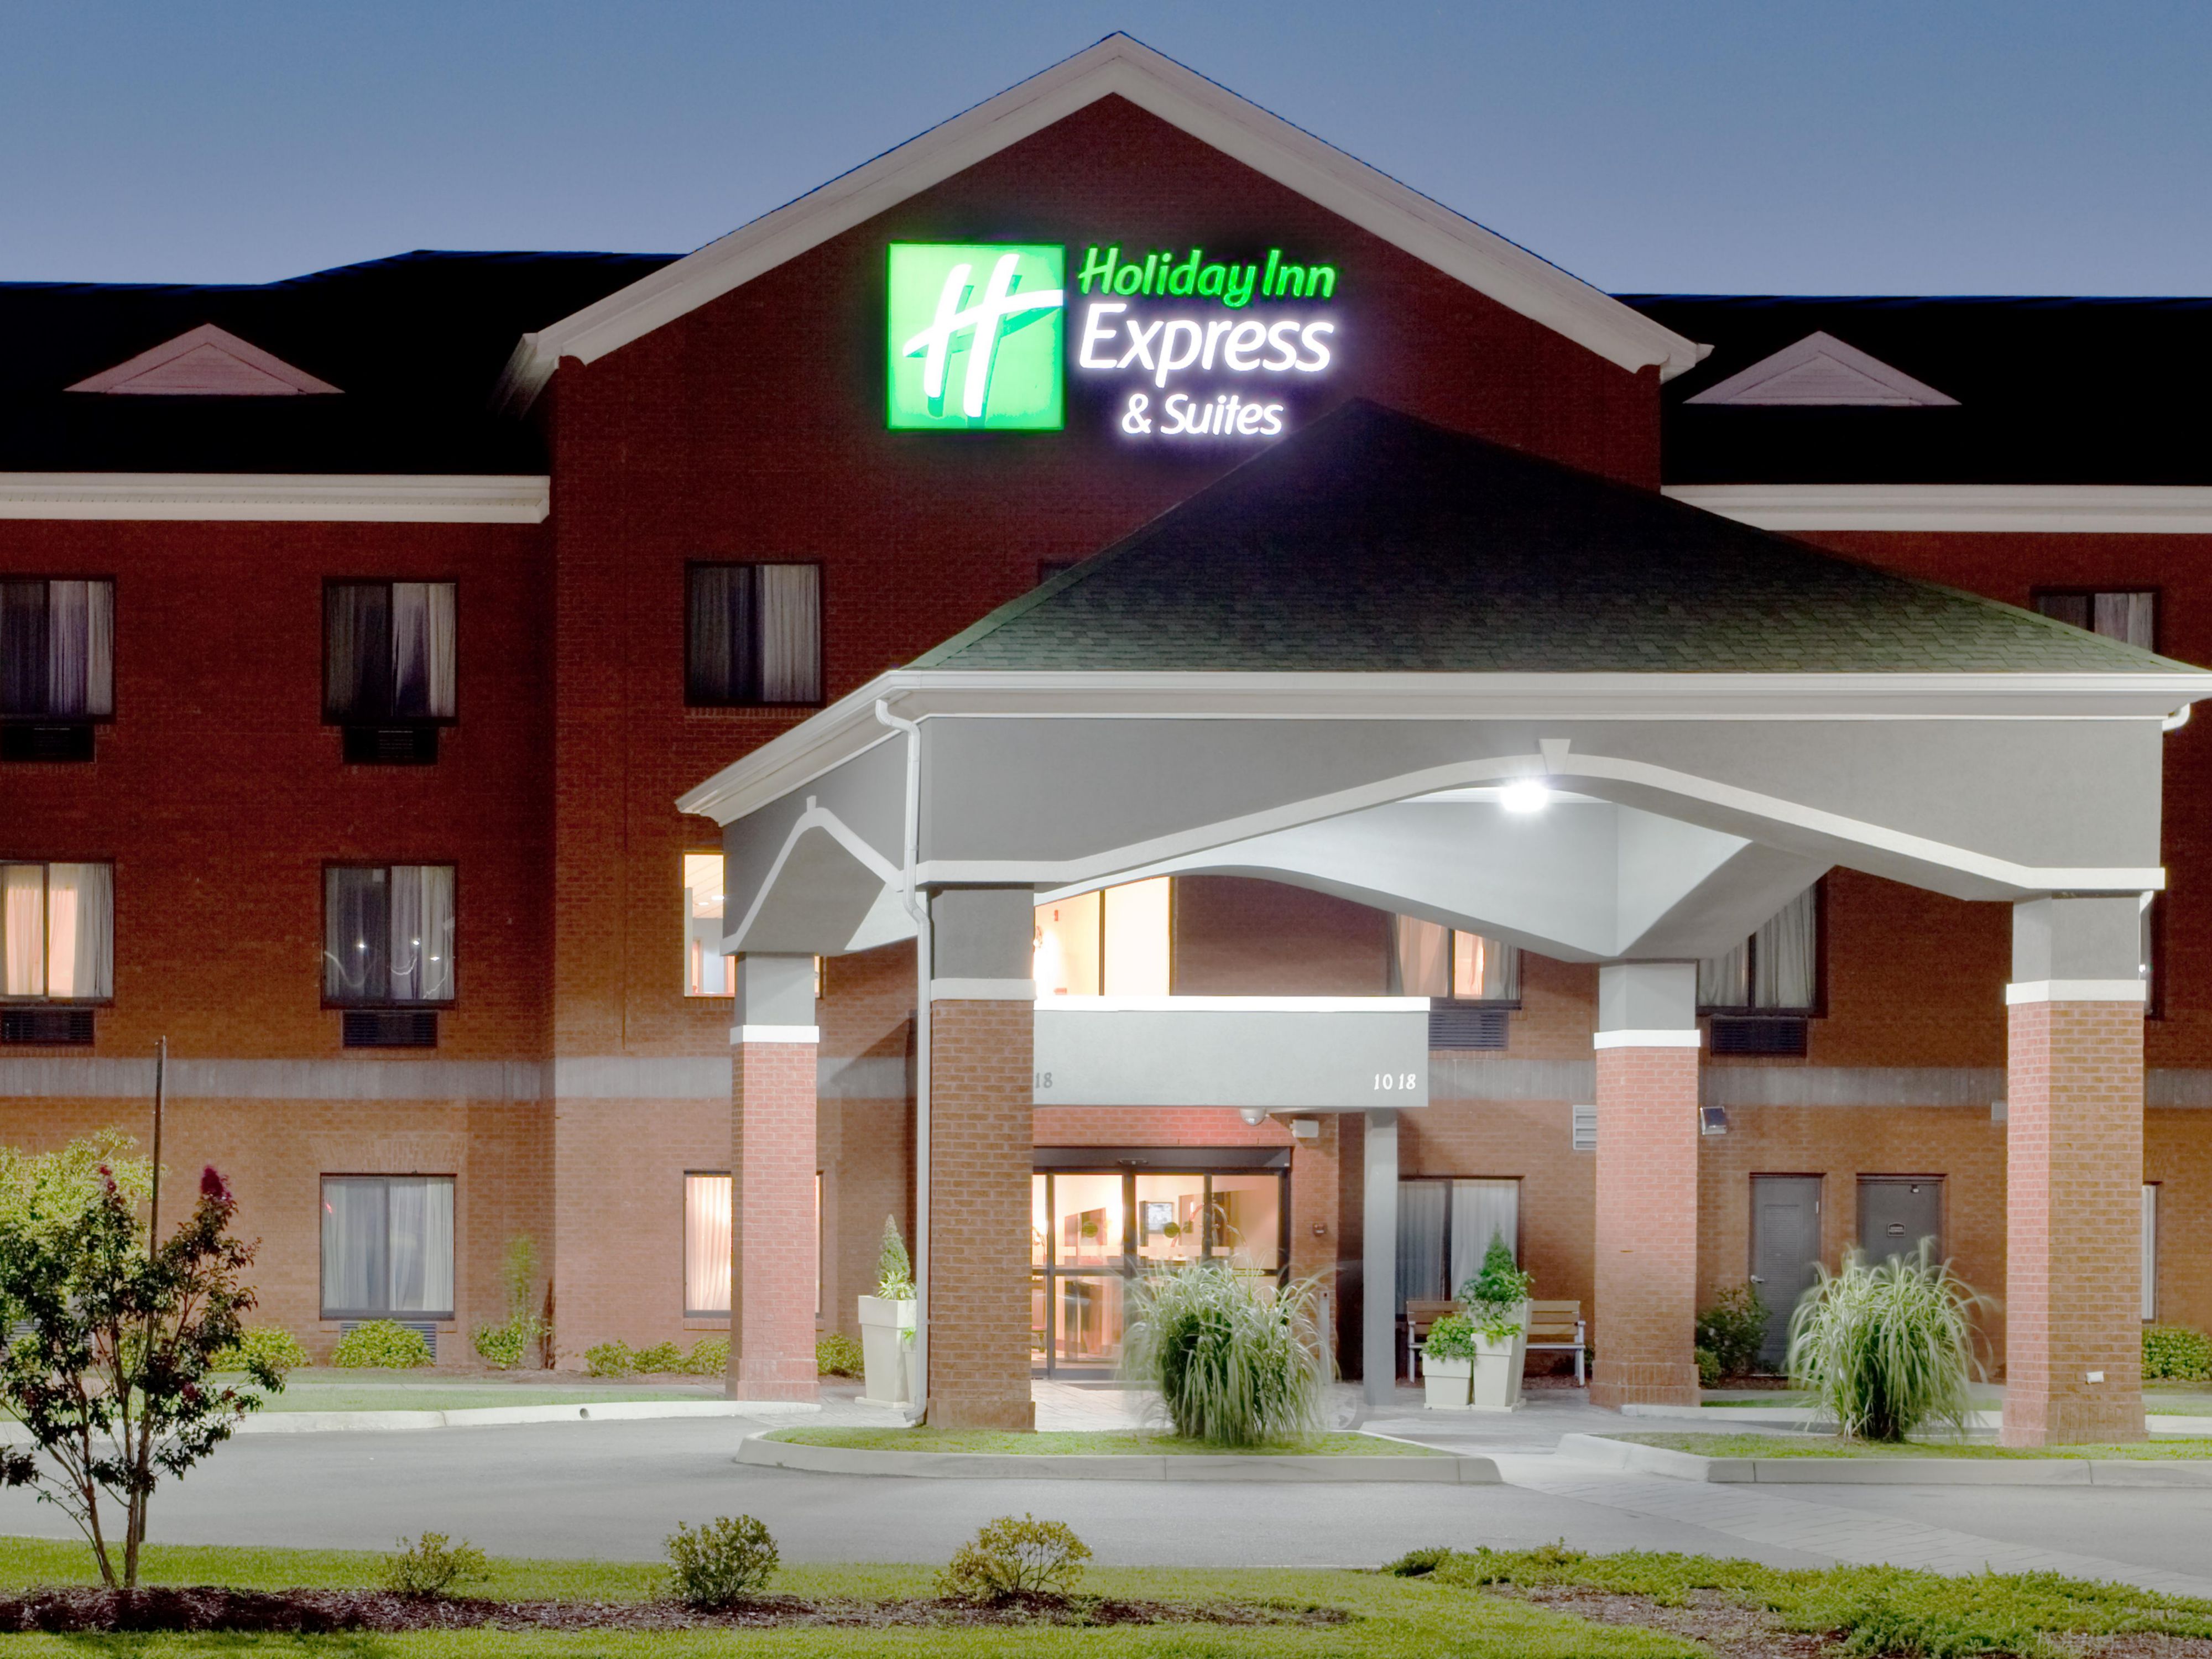 Budget Hotels In Norfolk Va Holiday Inn Express Norfolk Price From Usd 98 80